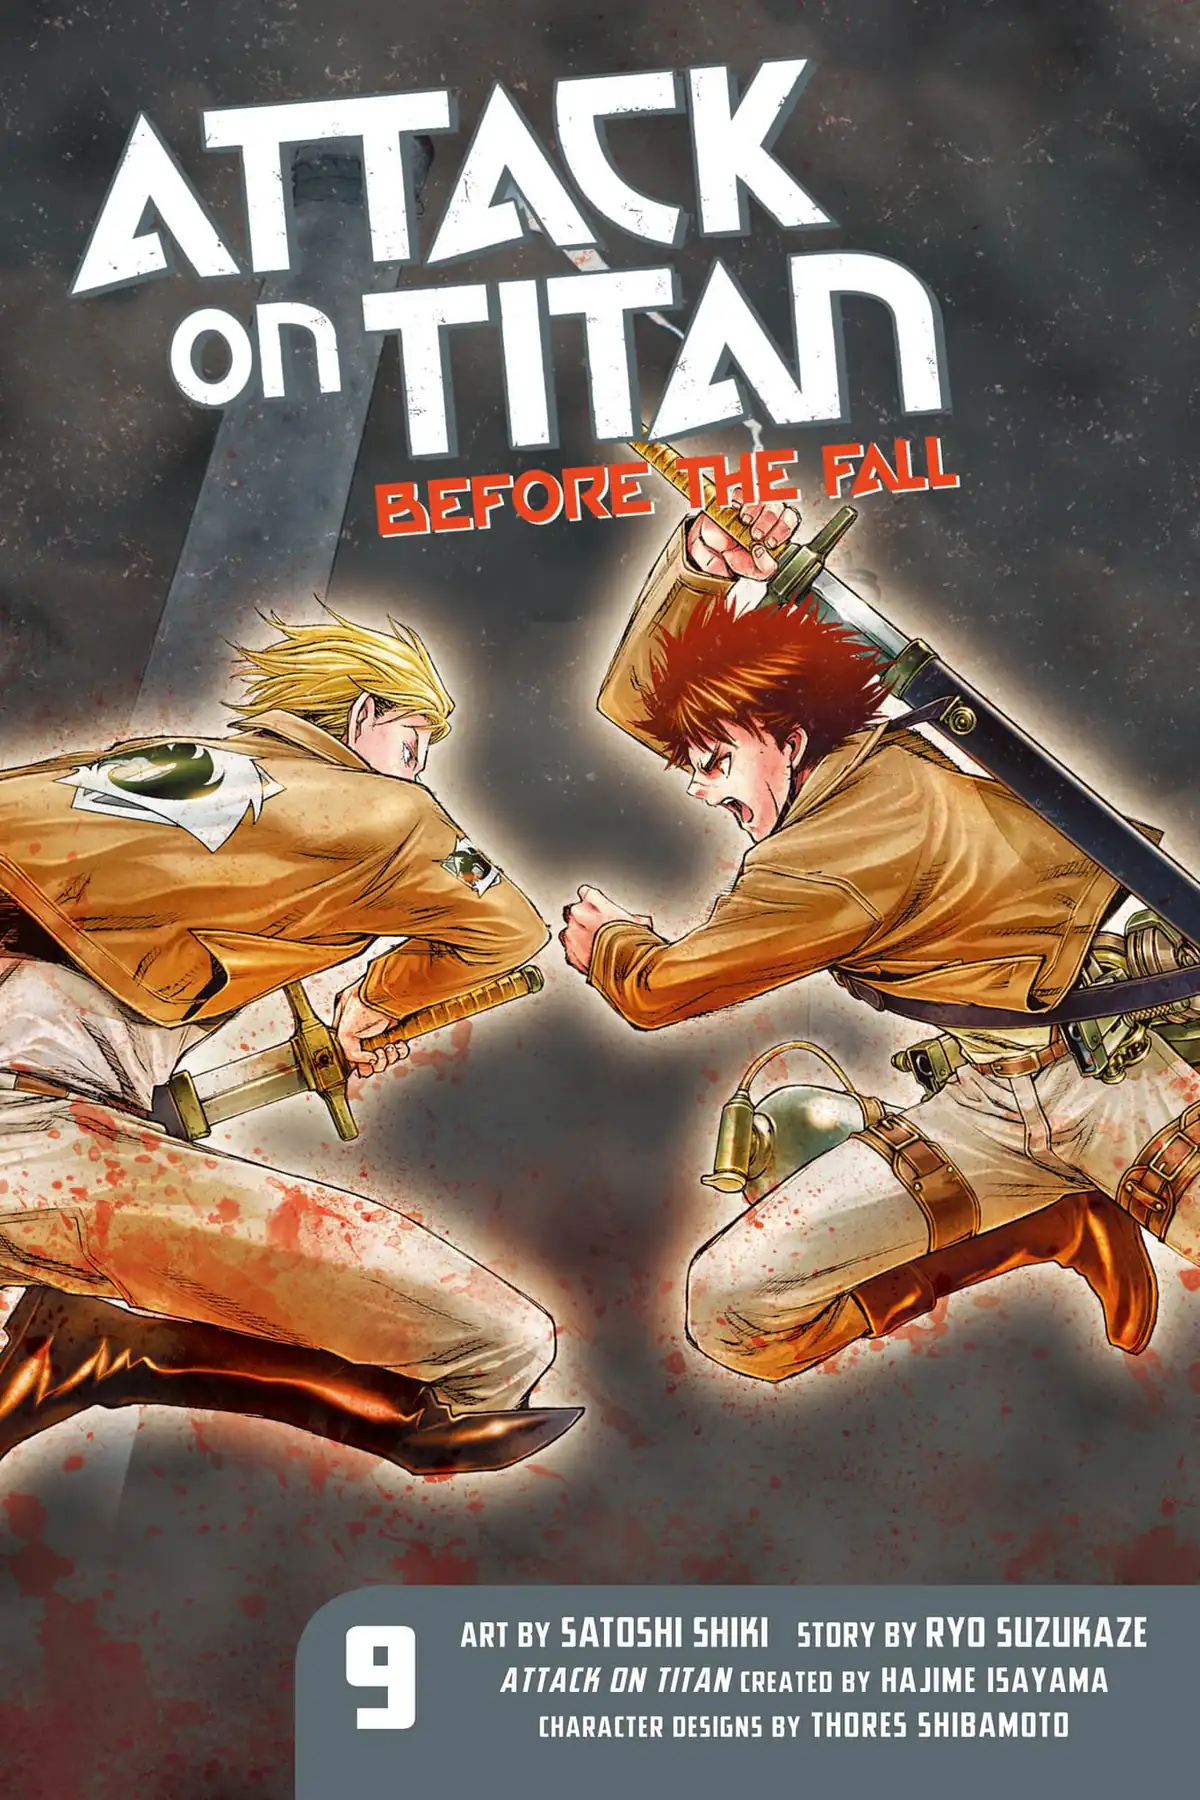 Attack on Titan, Vol. 16 (Attack on Titan, #16) by Hajime Isayama